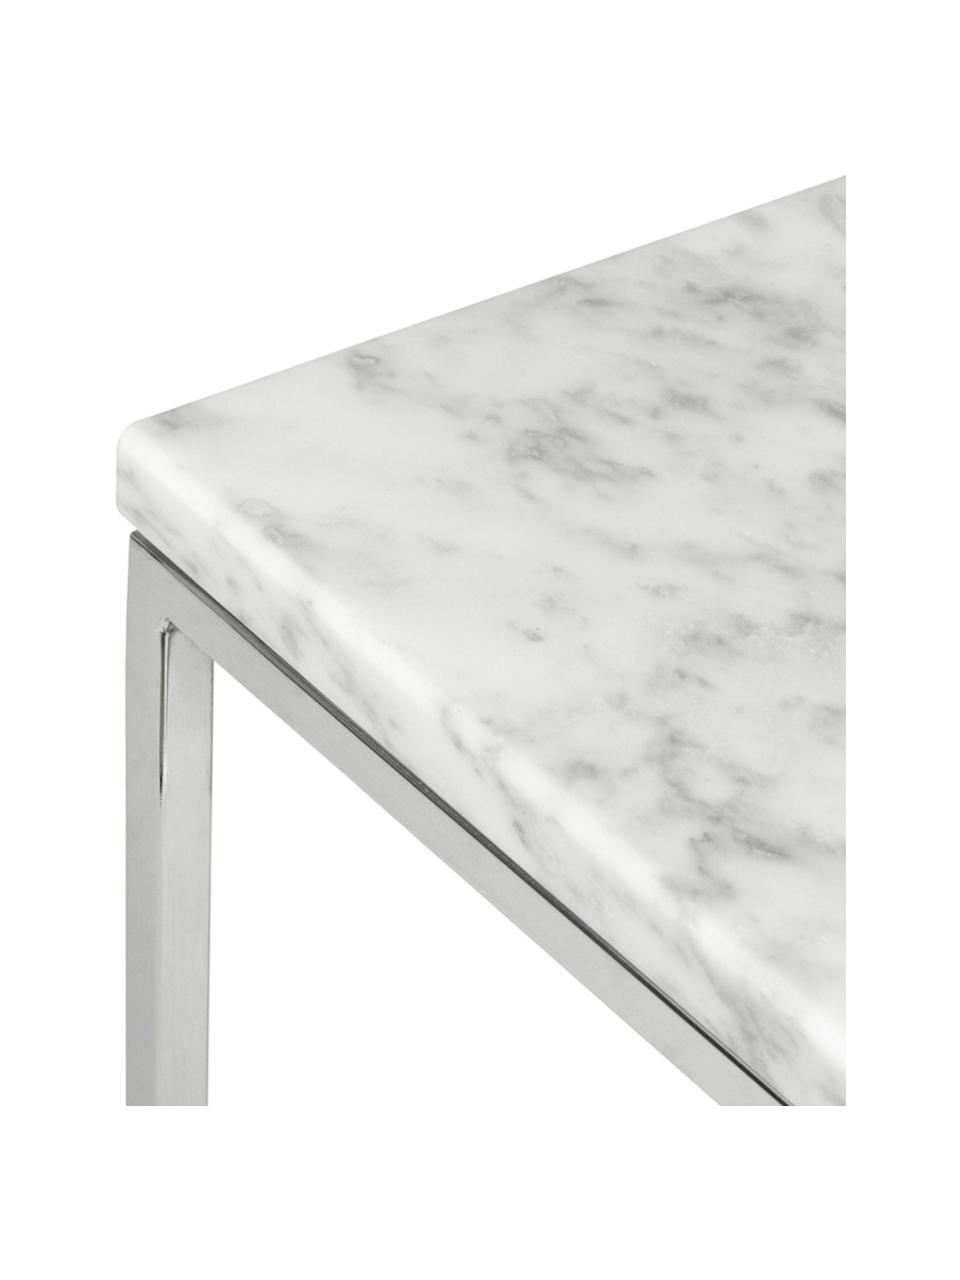 Marmeren bijzettafel Gleam, Tafelblad: marmer, Frame: verchroomd staal, Tafelblad: gemarmerd wit. Frame: chroomkleurig, 50 x 45 cm